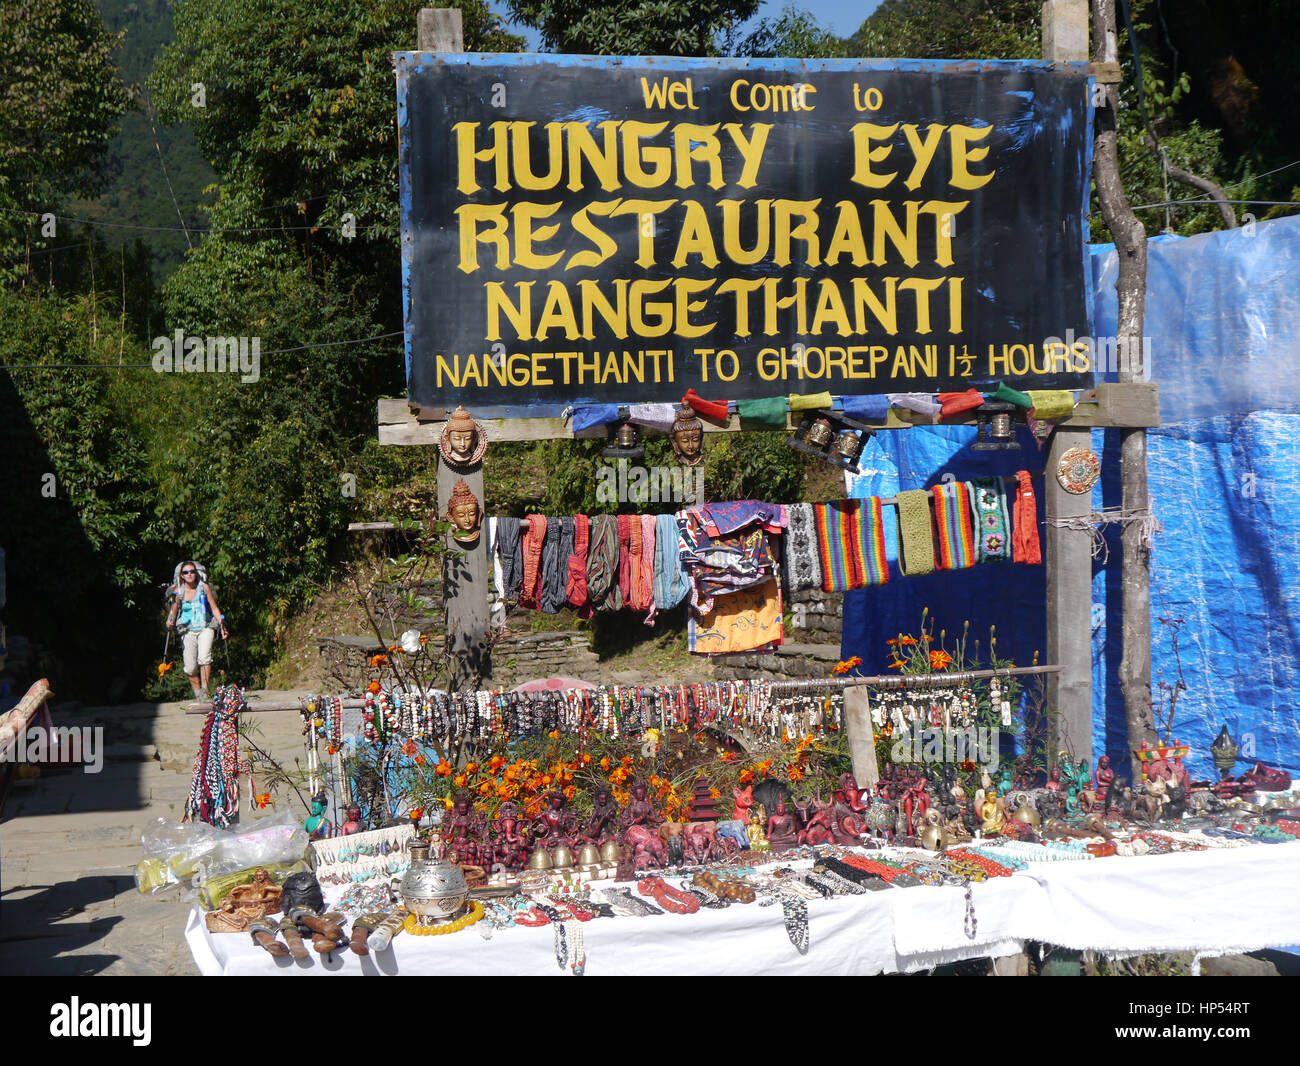 Tourist Souvenir Stall at the Hungry Eye Restaurant in Nangethanti near Ghorepani in the Annapurna Sanctuary, Himalayas, Nepal, Asia Stock Photo